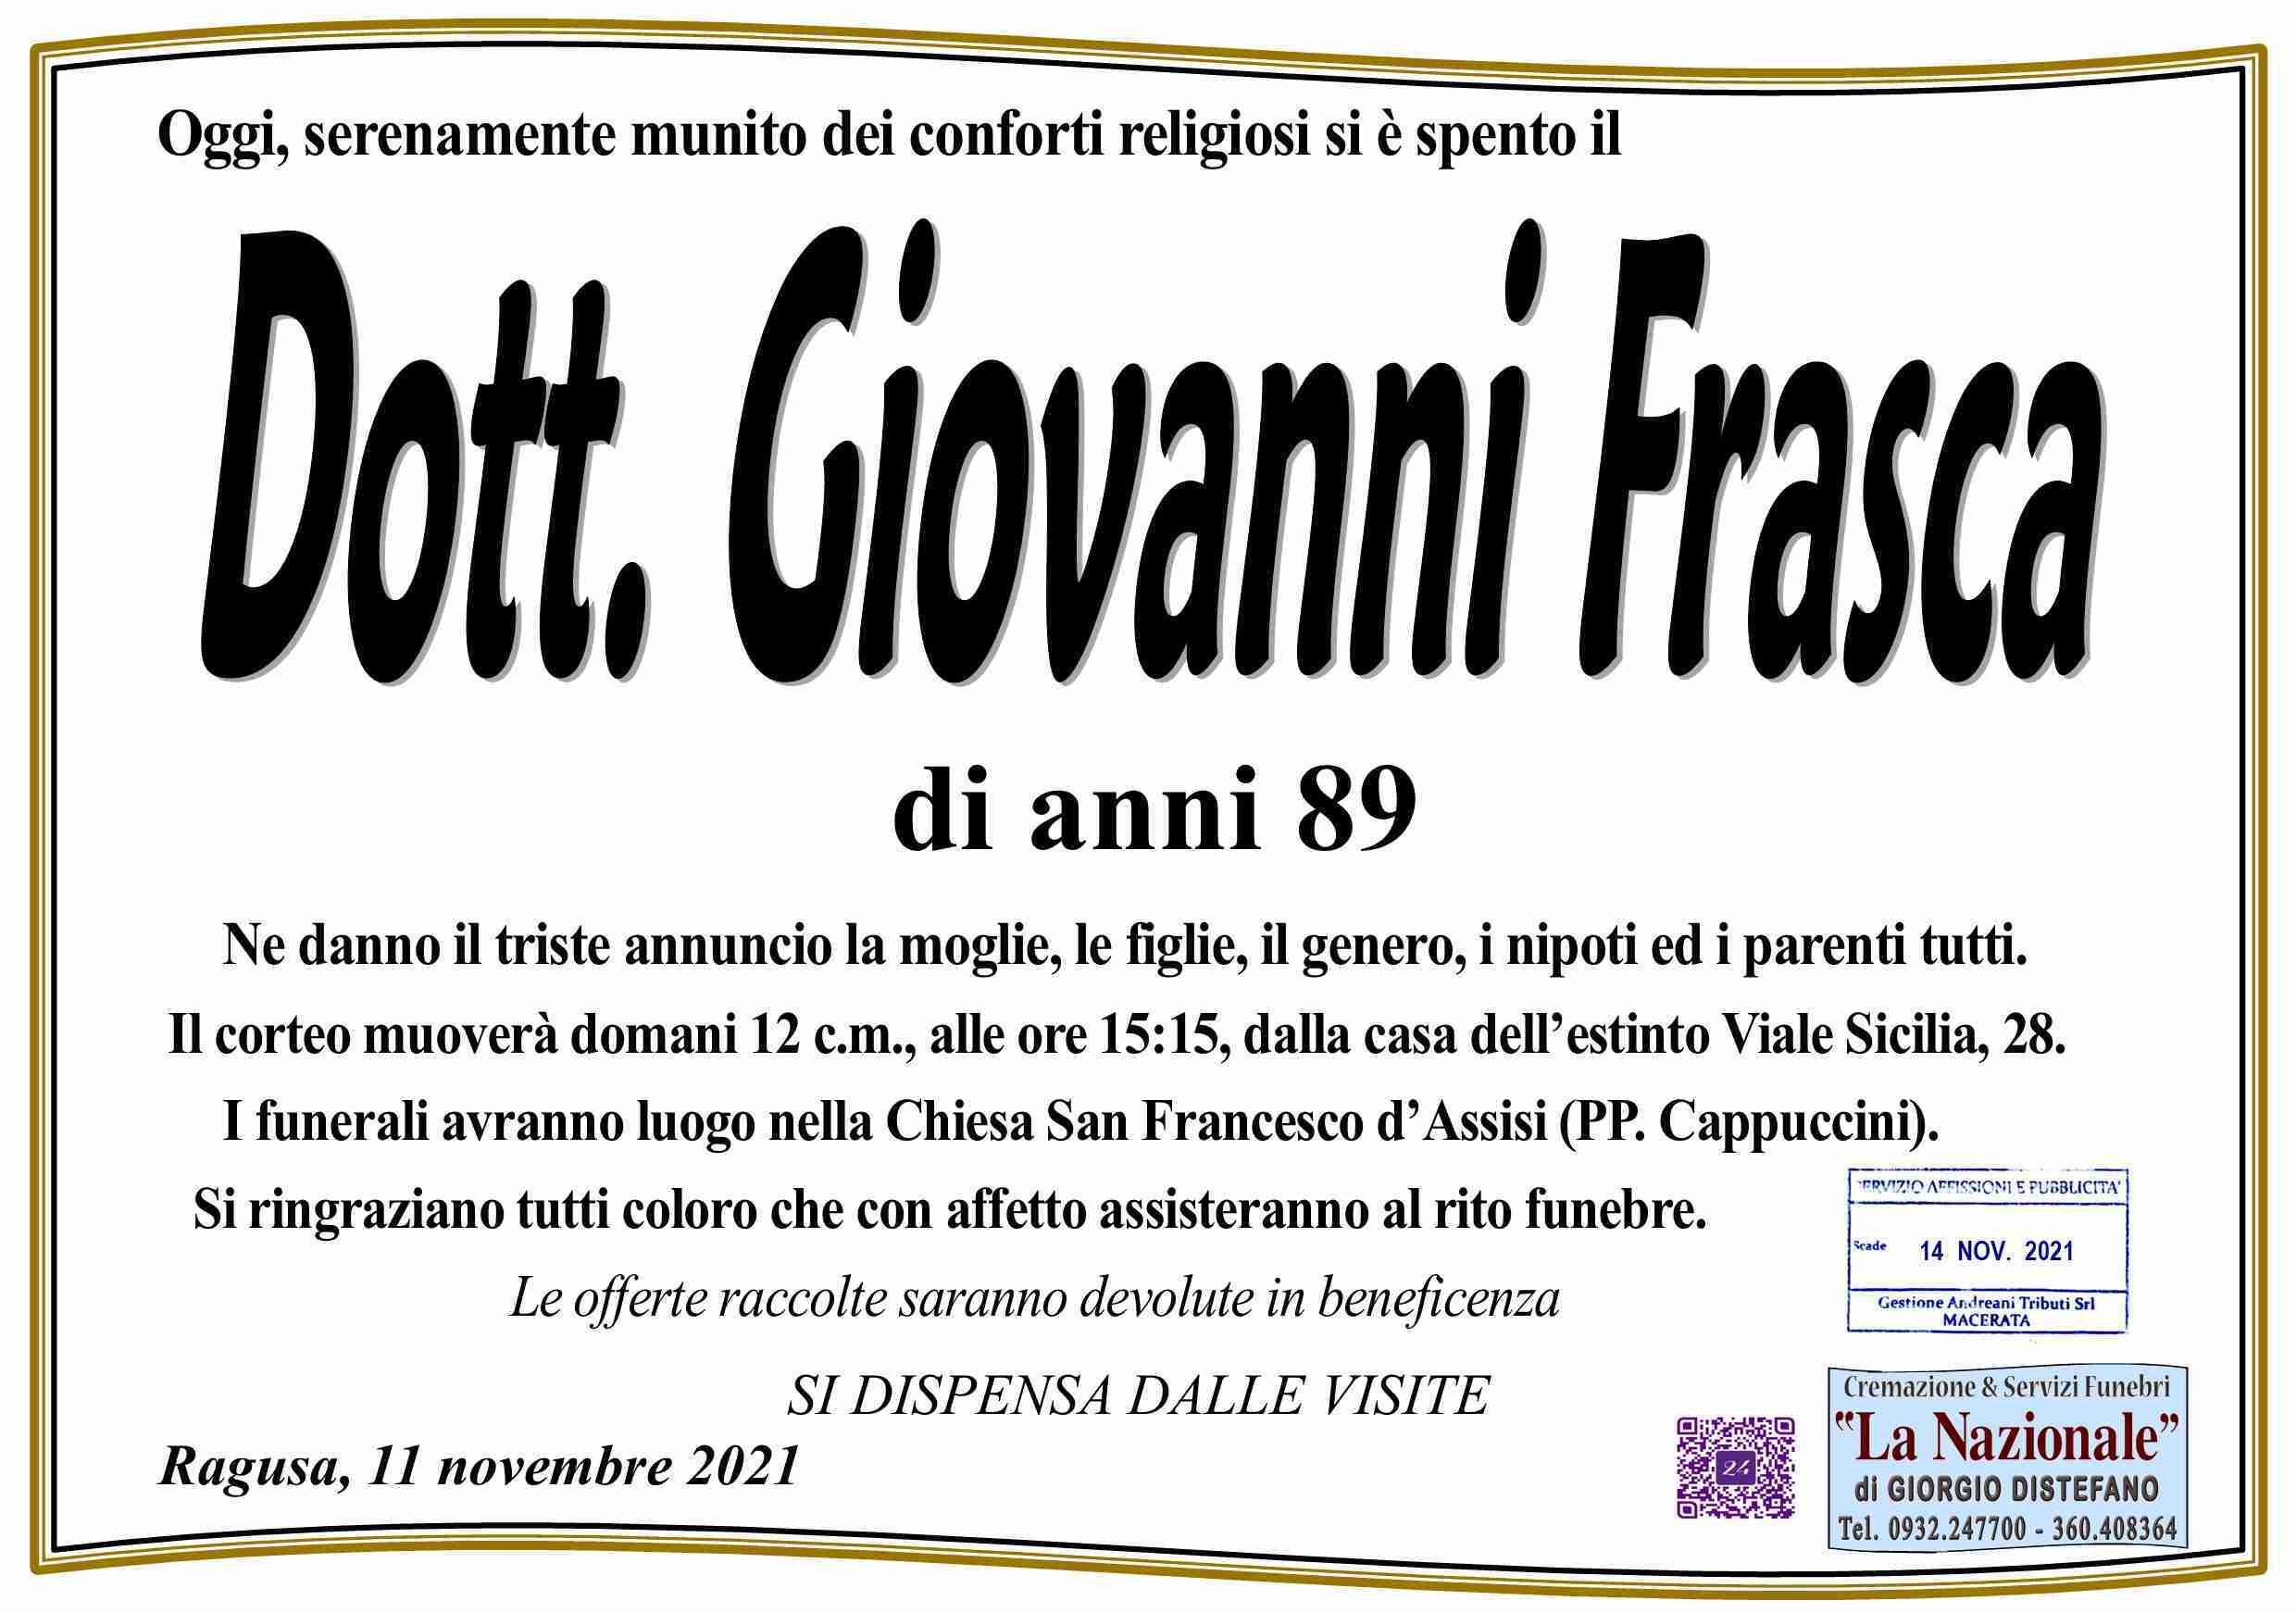 Giovanni Frasca